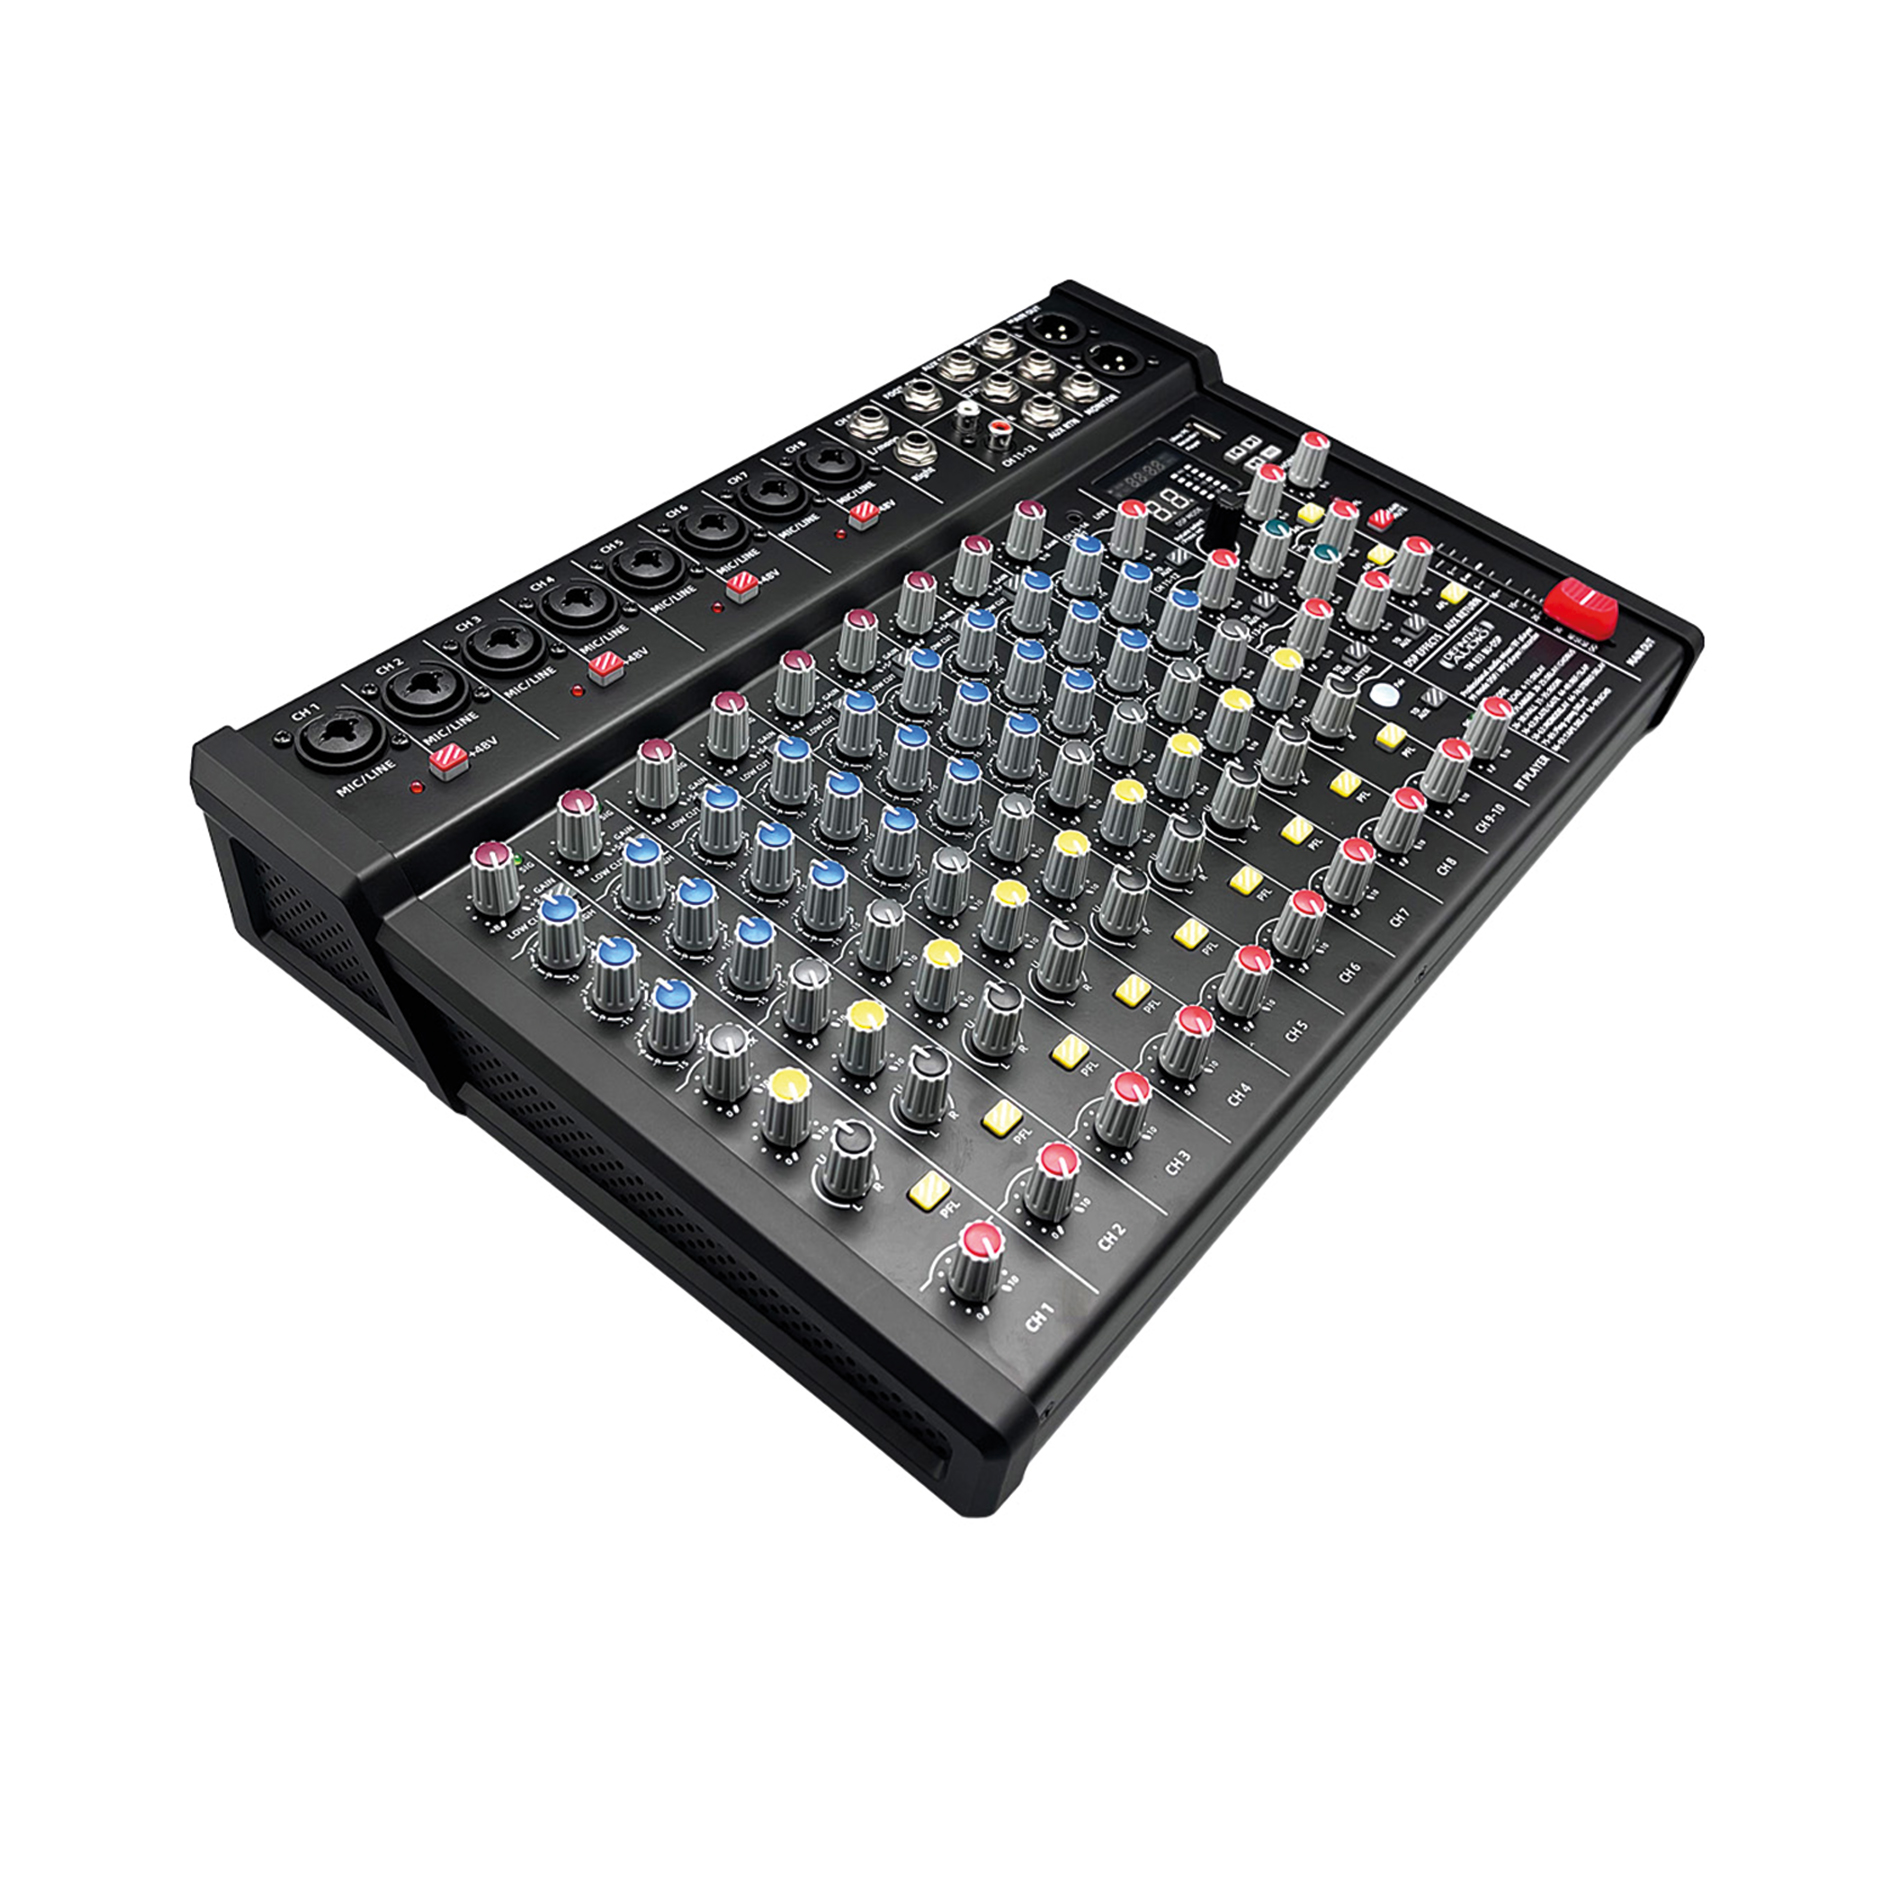 Definitive Audio Tm 833 Bu-dsp - Analog mixing desk - Variation 2